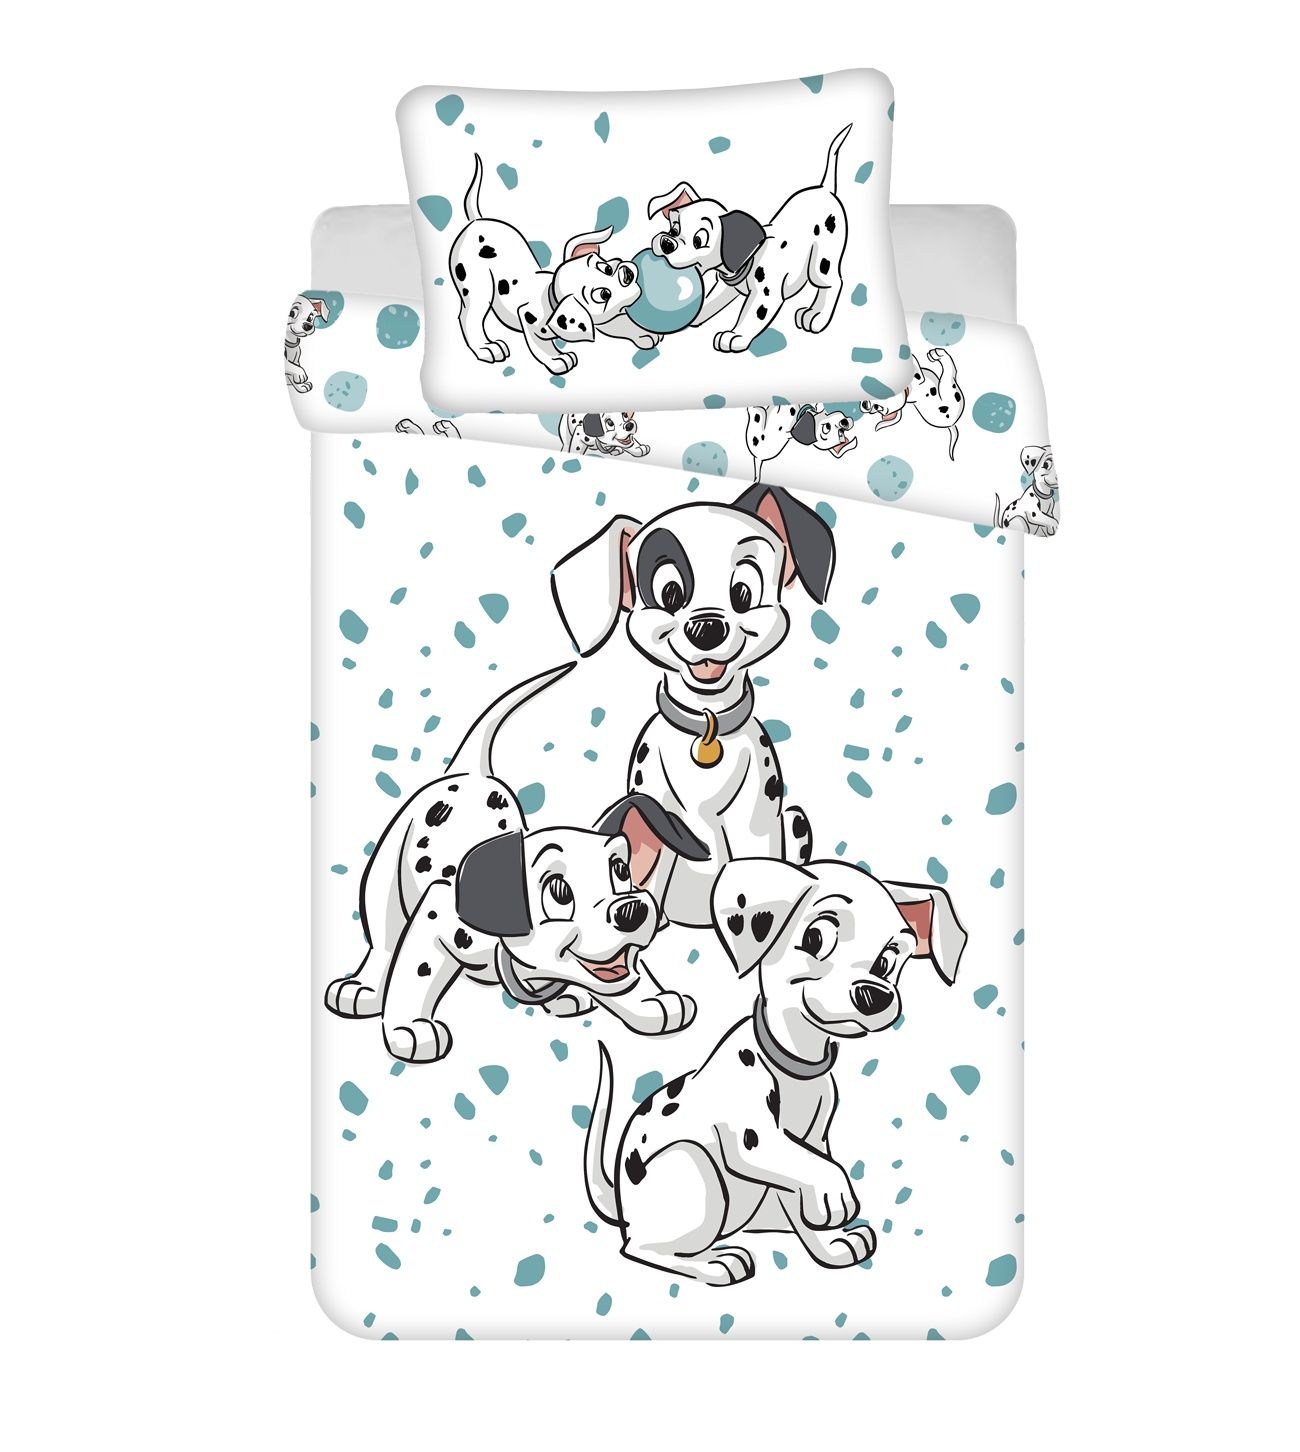 Jerry Fabrics Disney povlečení do postýlky 101 Dalmatians "Play" baby 100x135, 40x60 cm